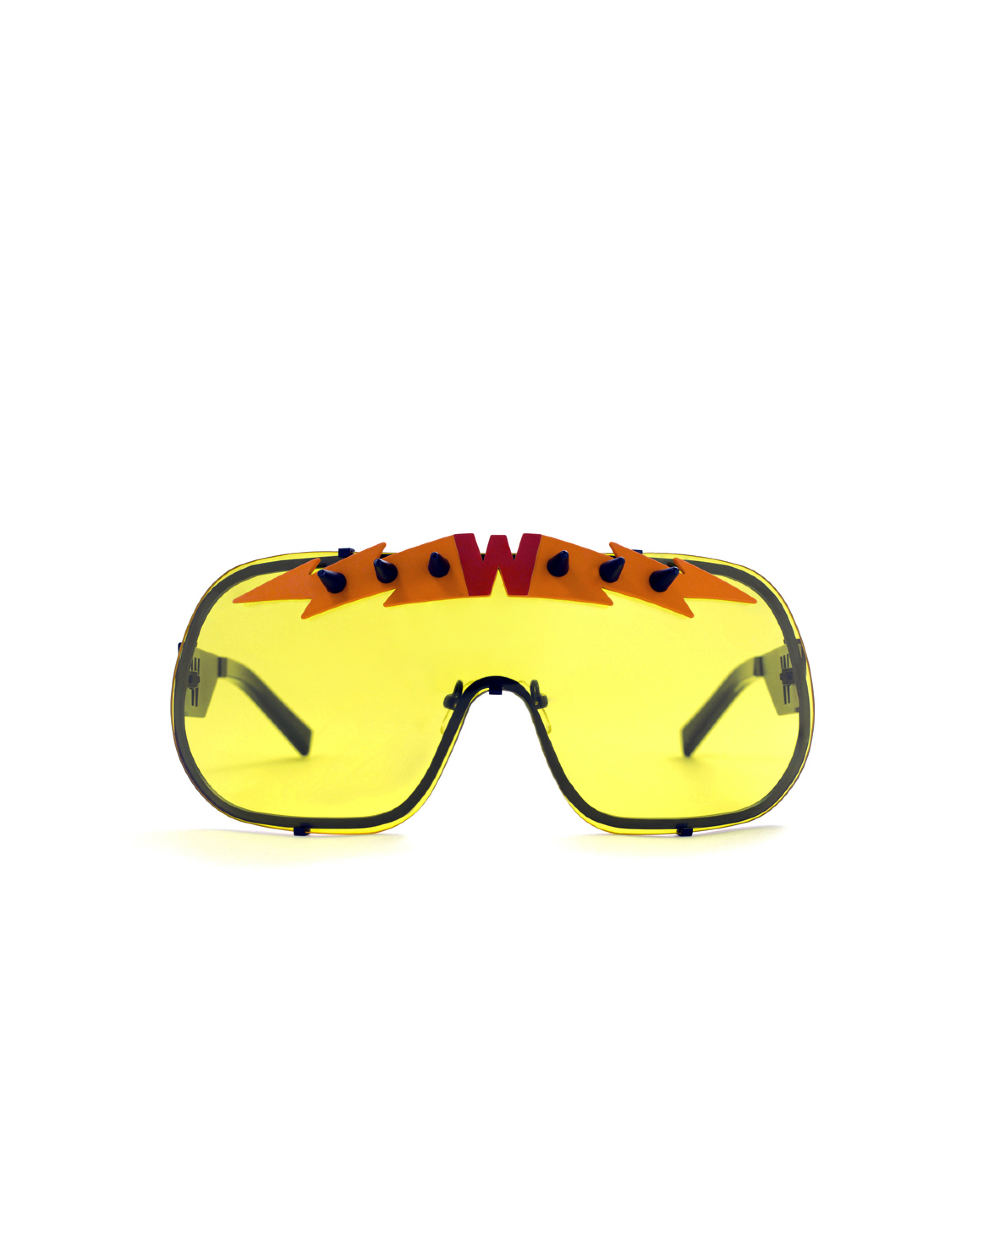 BlitZ Solar Shield Sunglasses. Yellow &amp; Orange Lightning